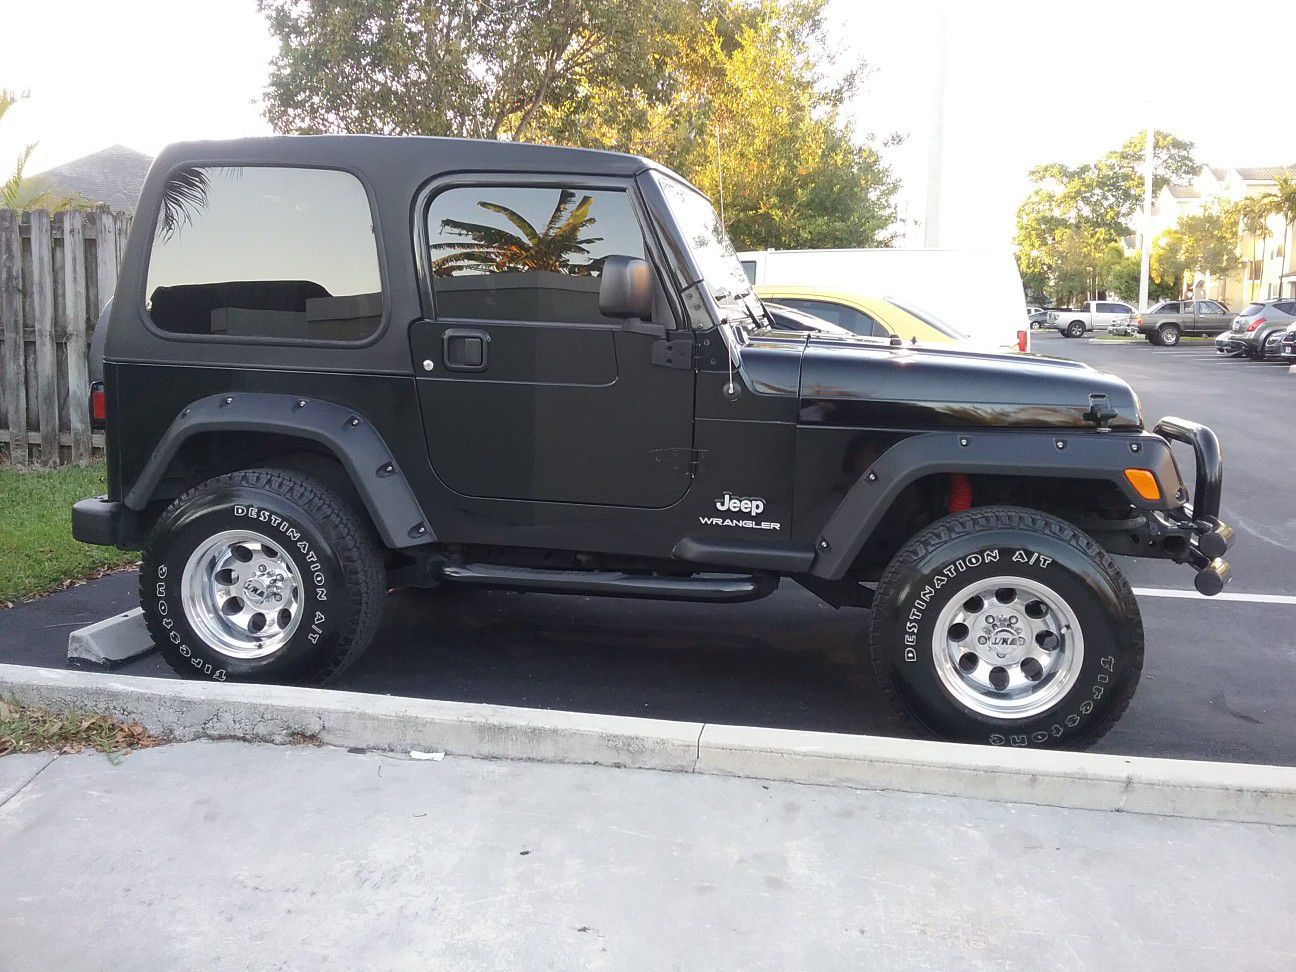 Jeep TJ 2005 wrangler